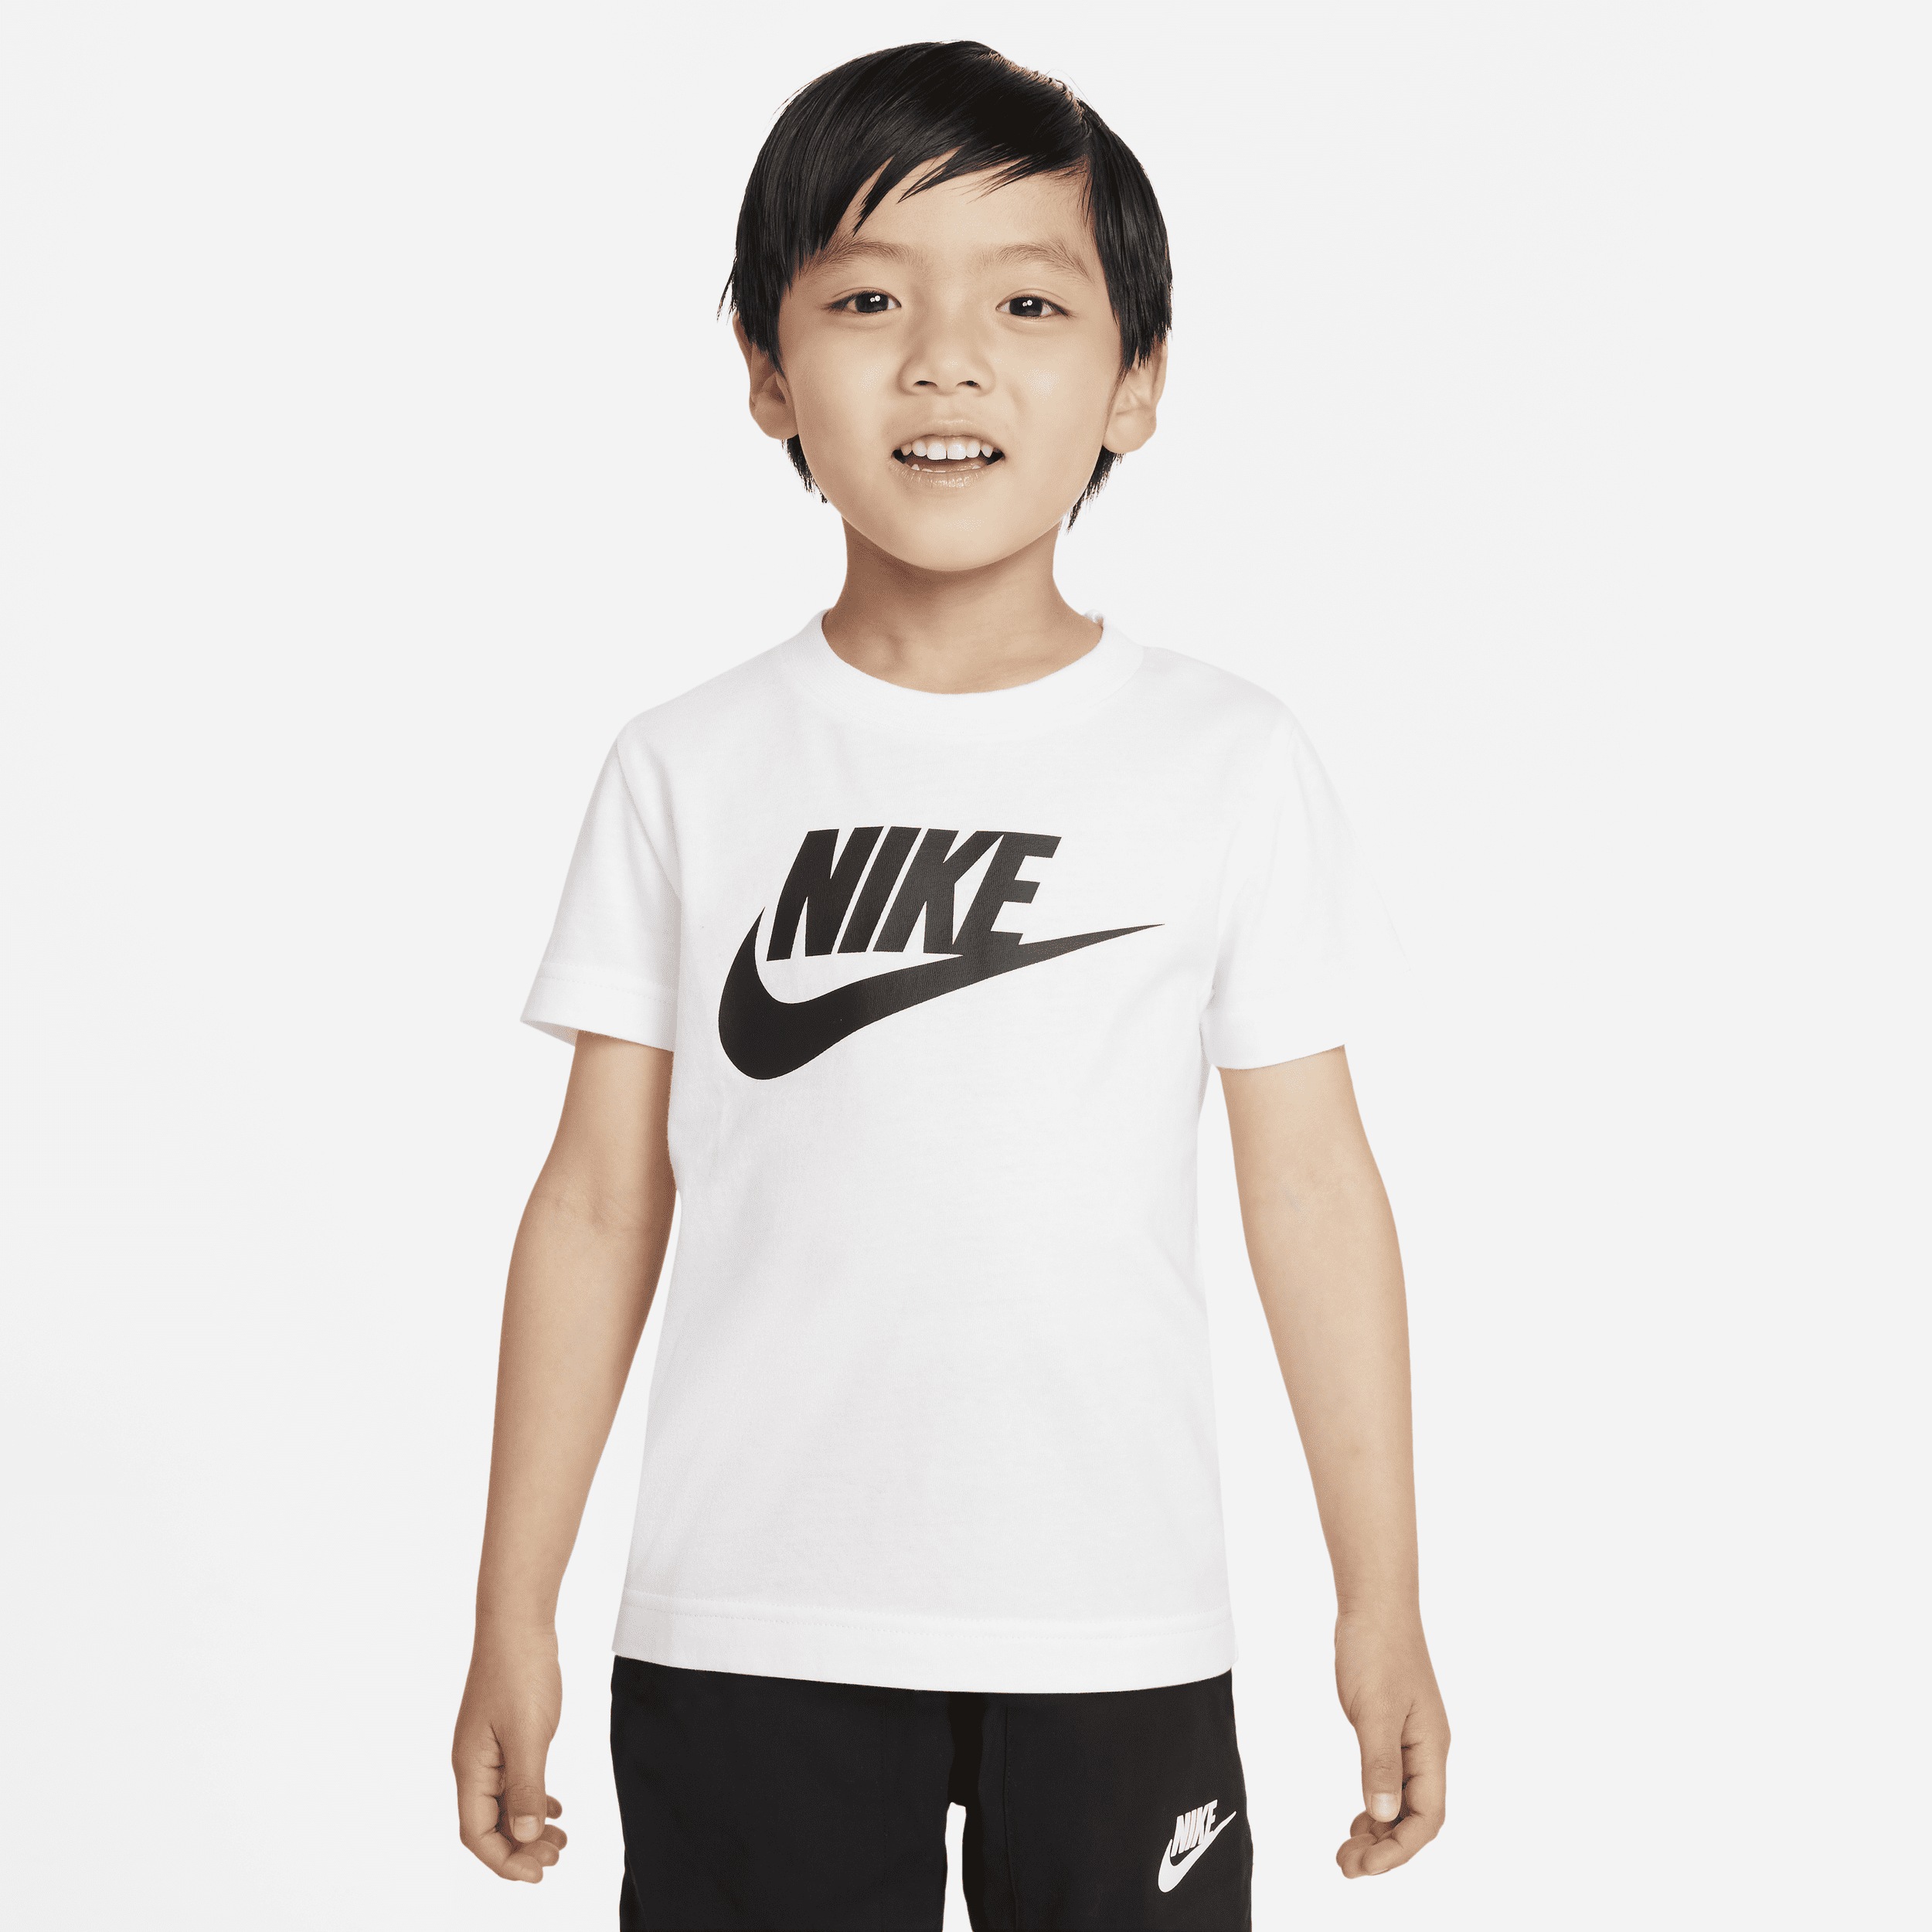 T-shirt Nike - Bimbi piccoli - Bianco